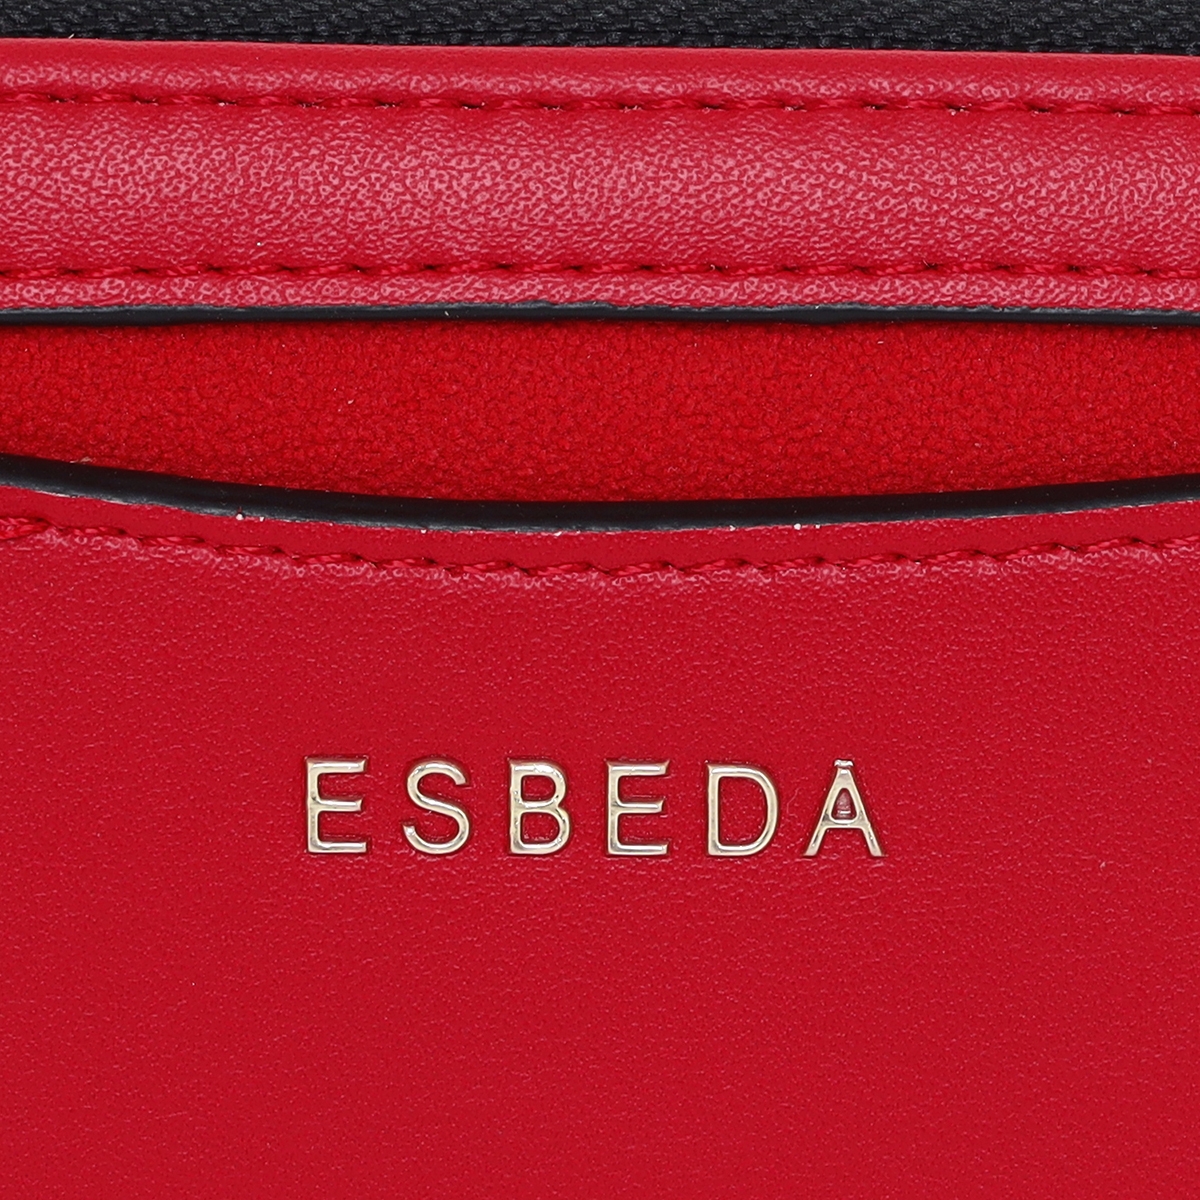 ESBEDA | ESBEDA Red Color Soft Suede Wallet For Women's- Small 6